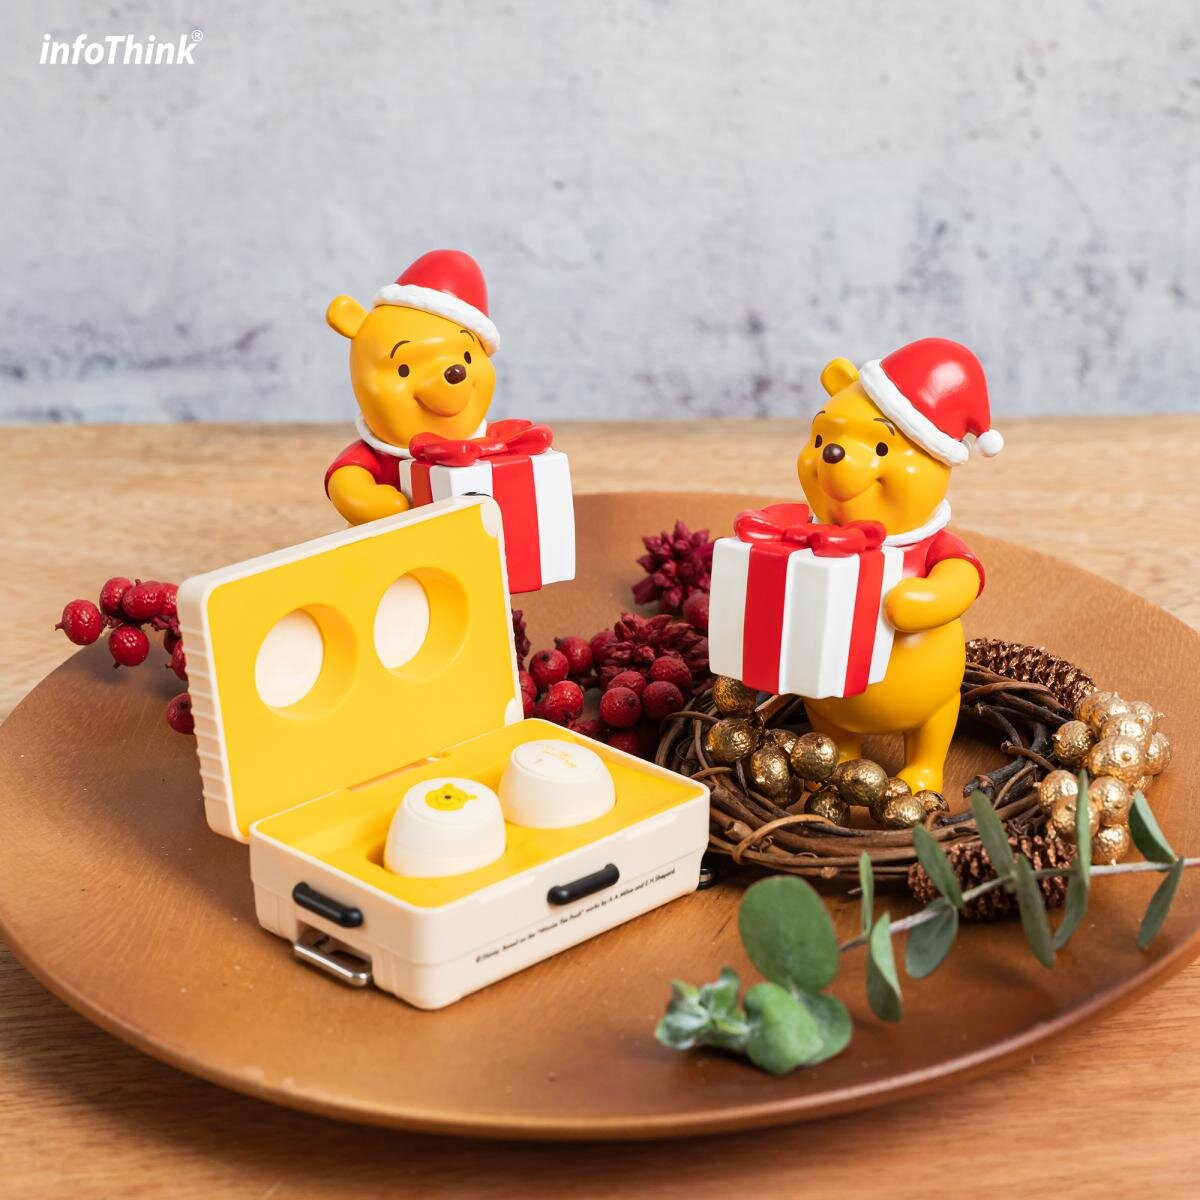 InfoThink Winnie The Pooh Series <Christmas Version> Wireless Bluetooth Speaker